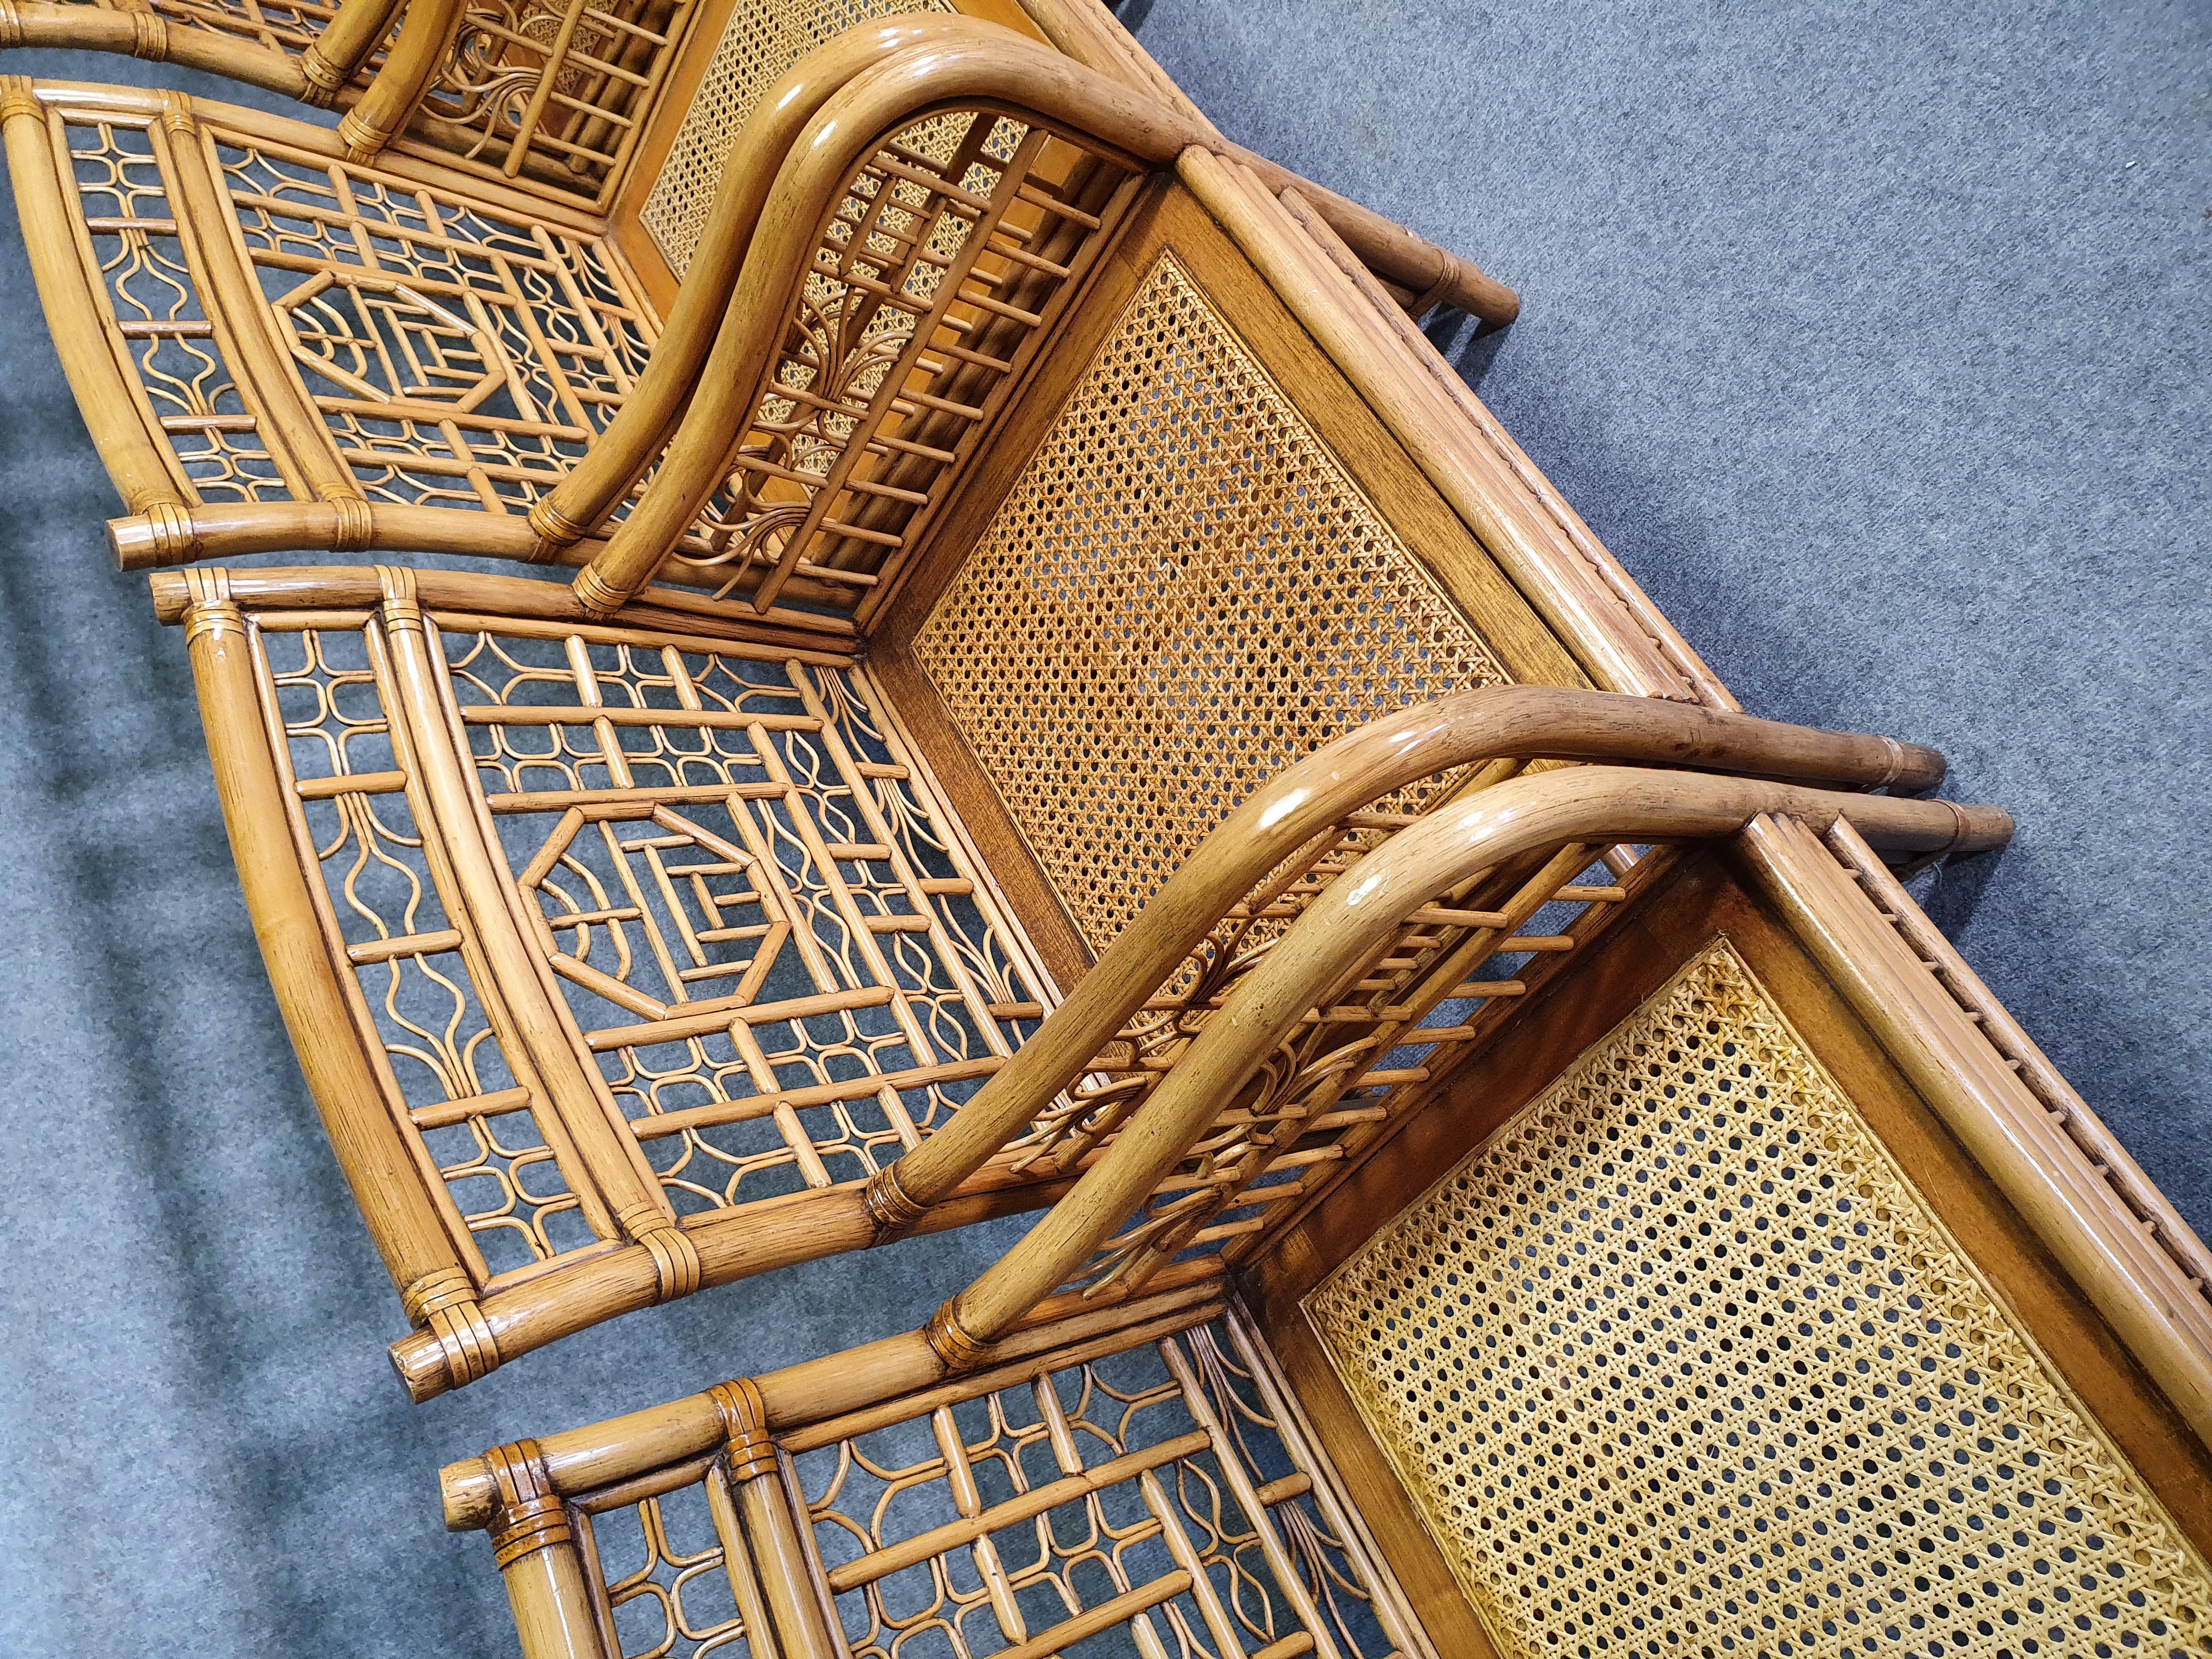 Américain 4 x Chaise en rotin Mcguire marquée Chinois / Chinoiserie Chique bamboo en vente